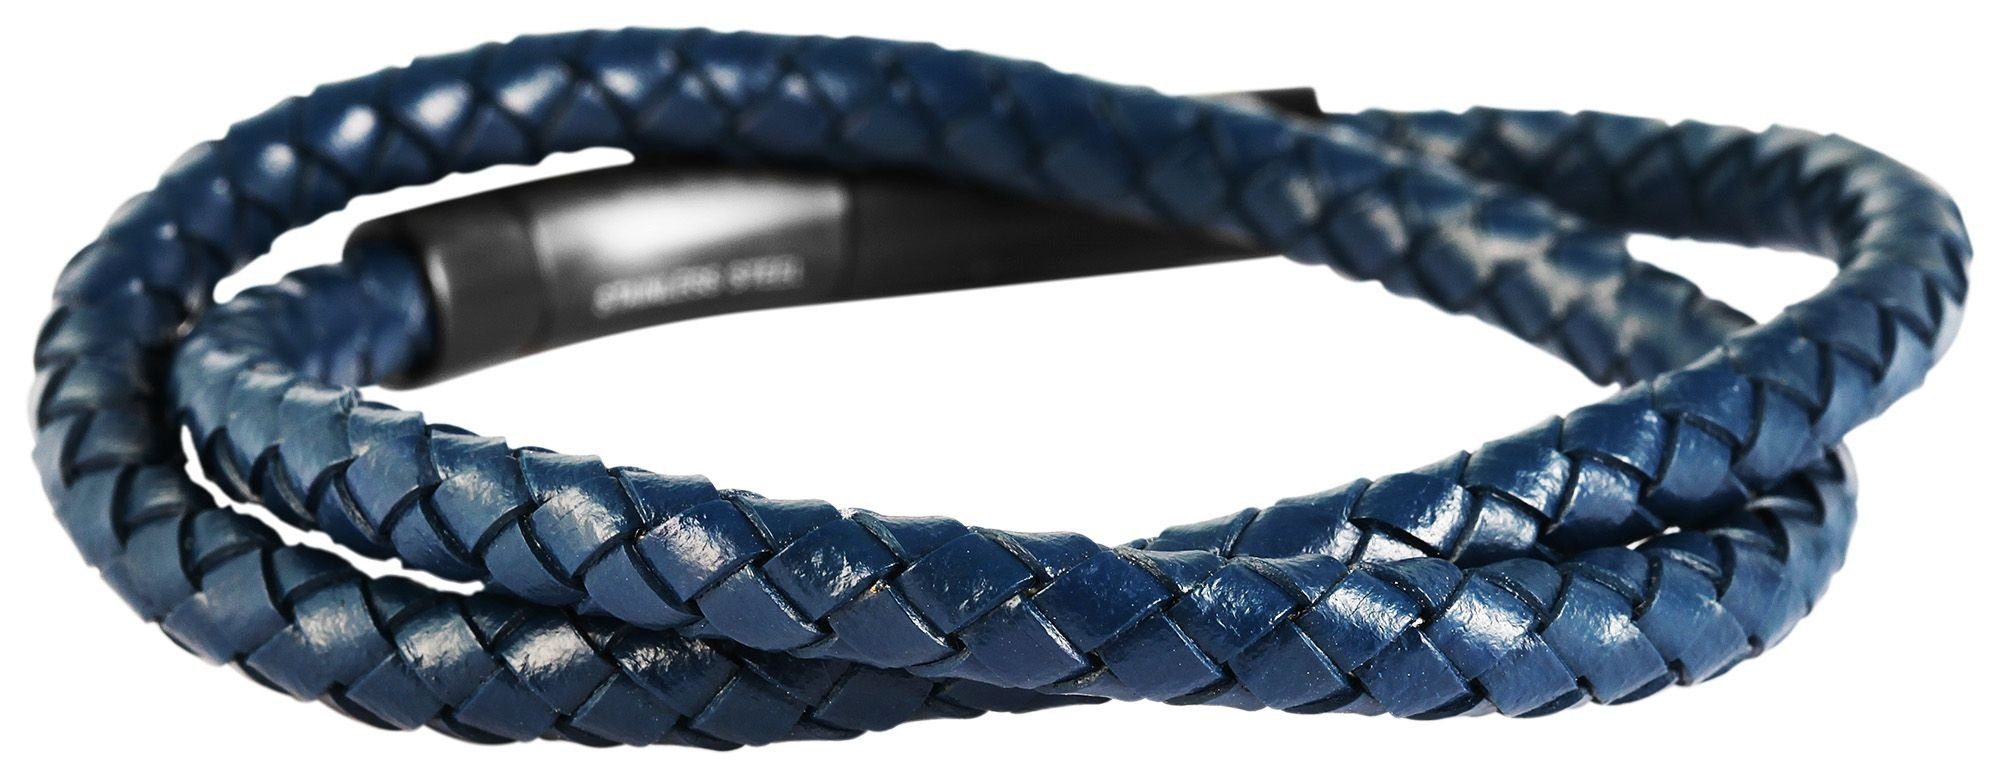 (einzeln) Echt Blau Edelstahl Jons mit Lederarmband Herren Leder Armband aus AKZENT Steckverschluss aus